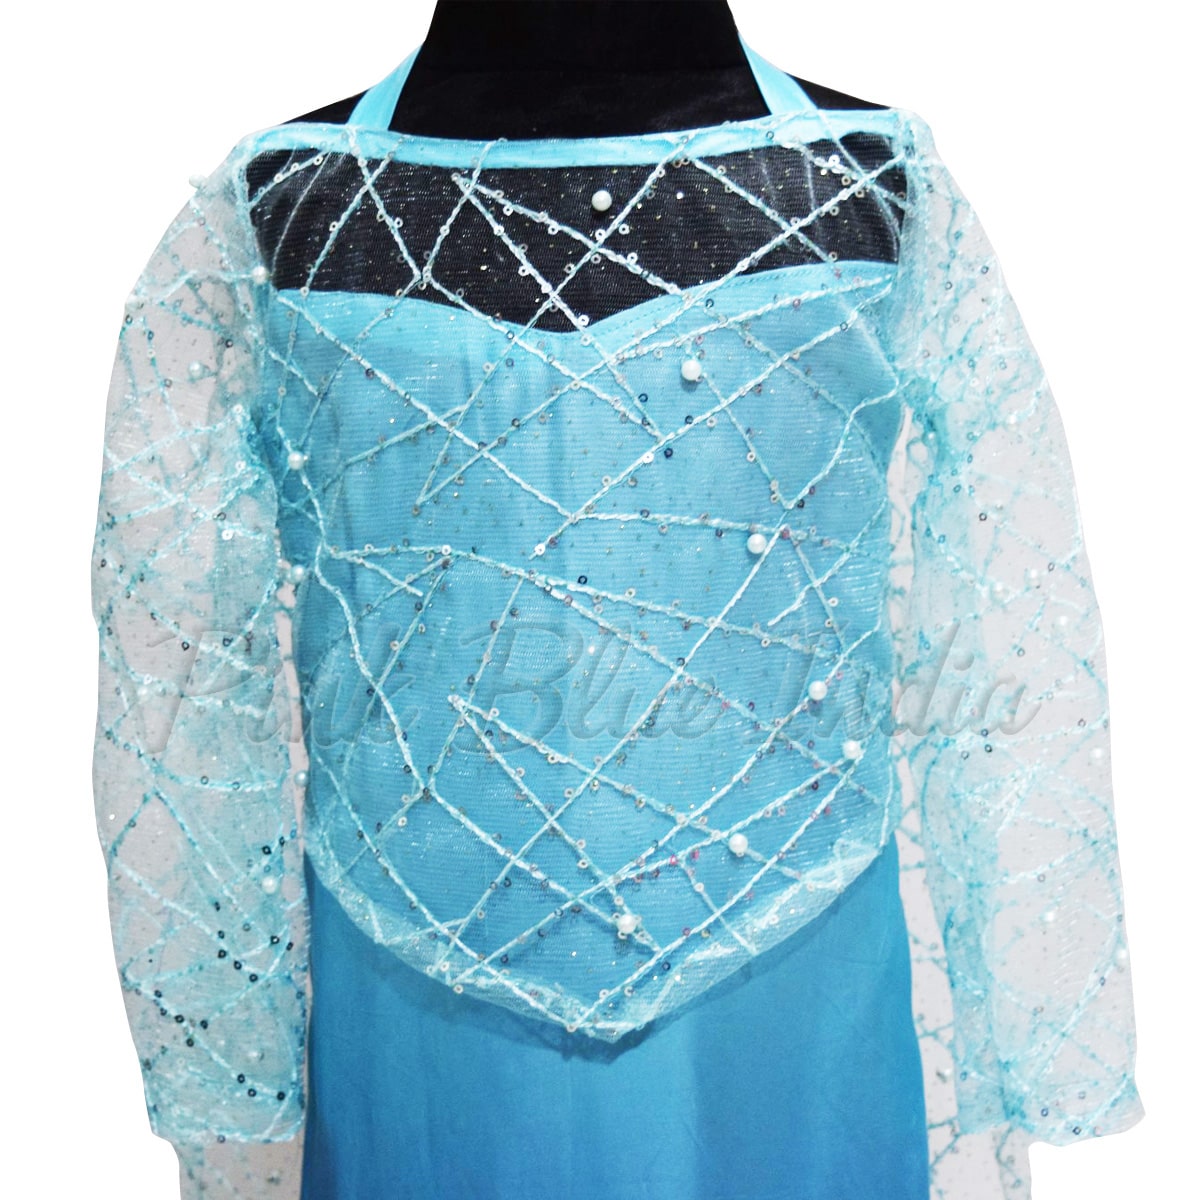 Elsa final dress pose | Frozen elsa dress, Frozen birthday dress, Elsa dress